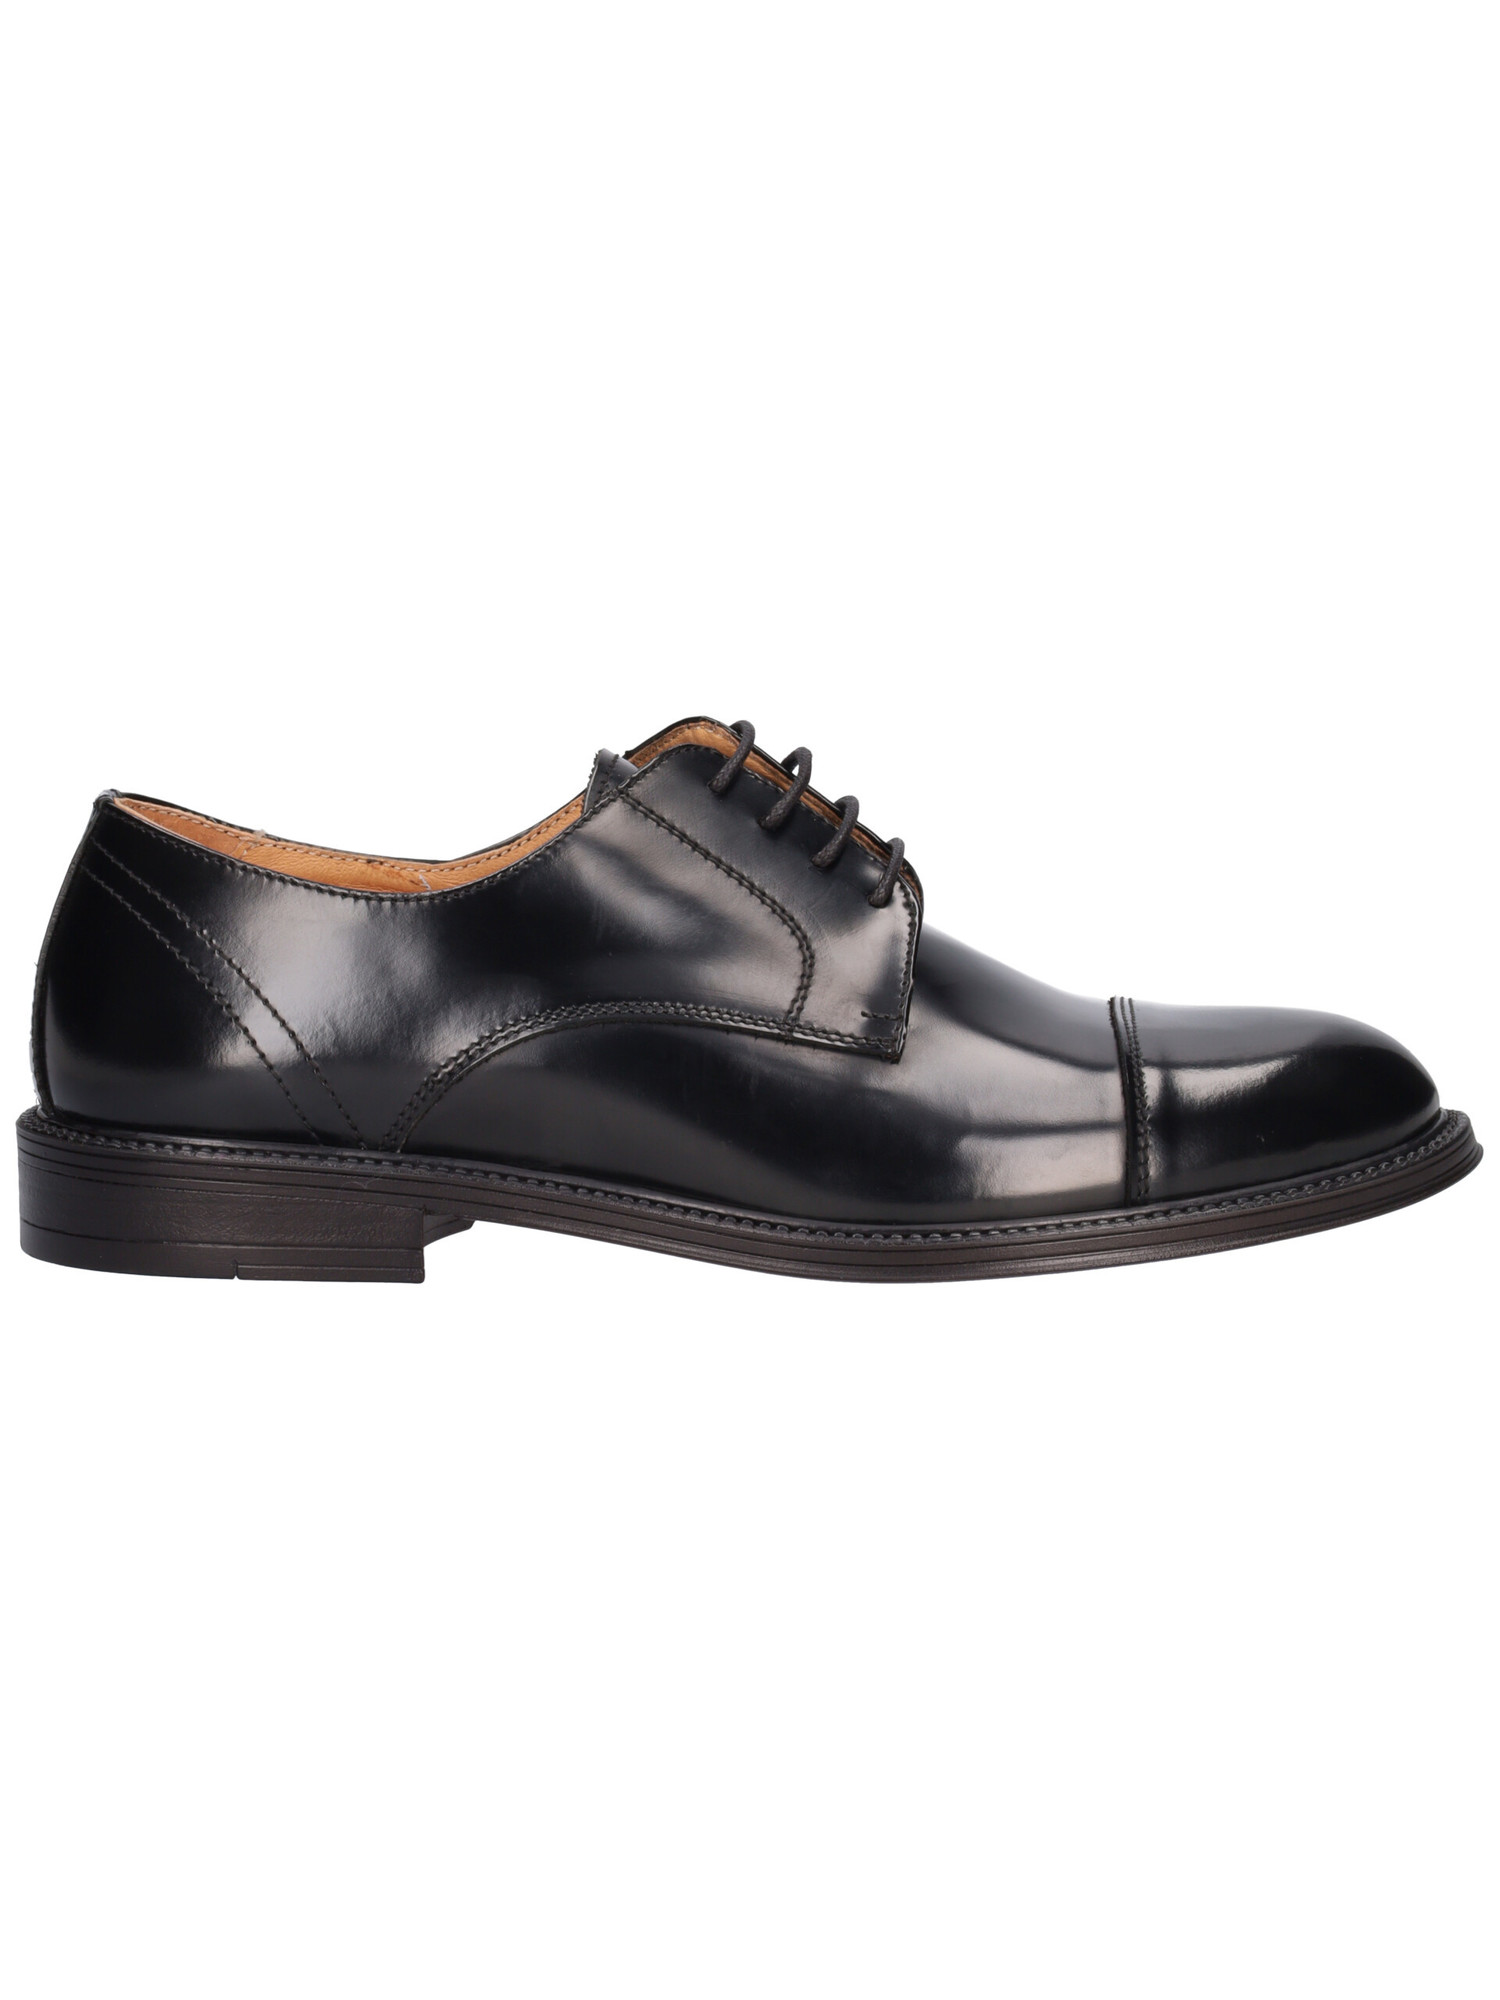 scarpa-elegante-exton-da-uomo-nera-b1b893